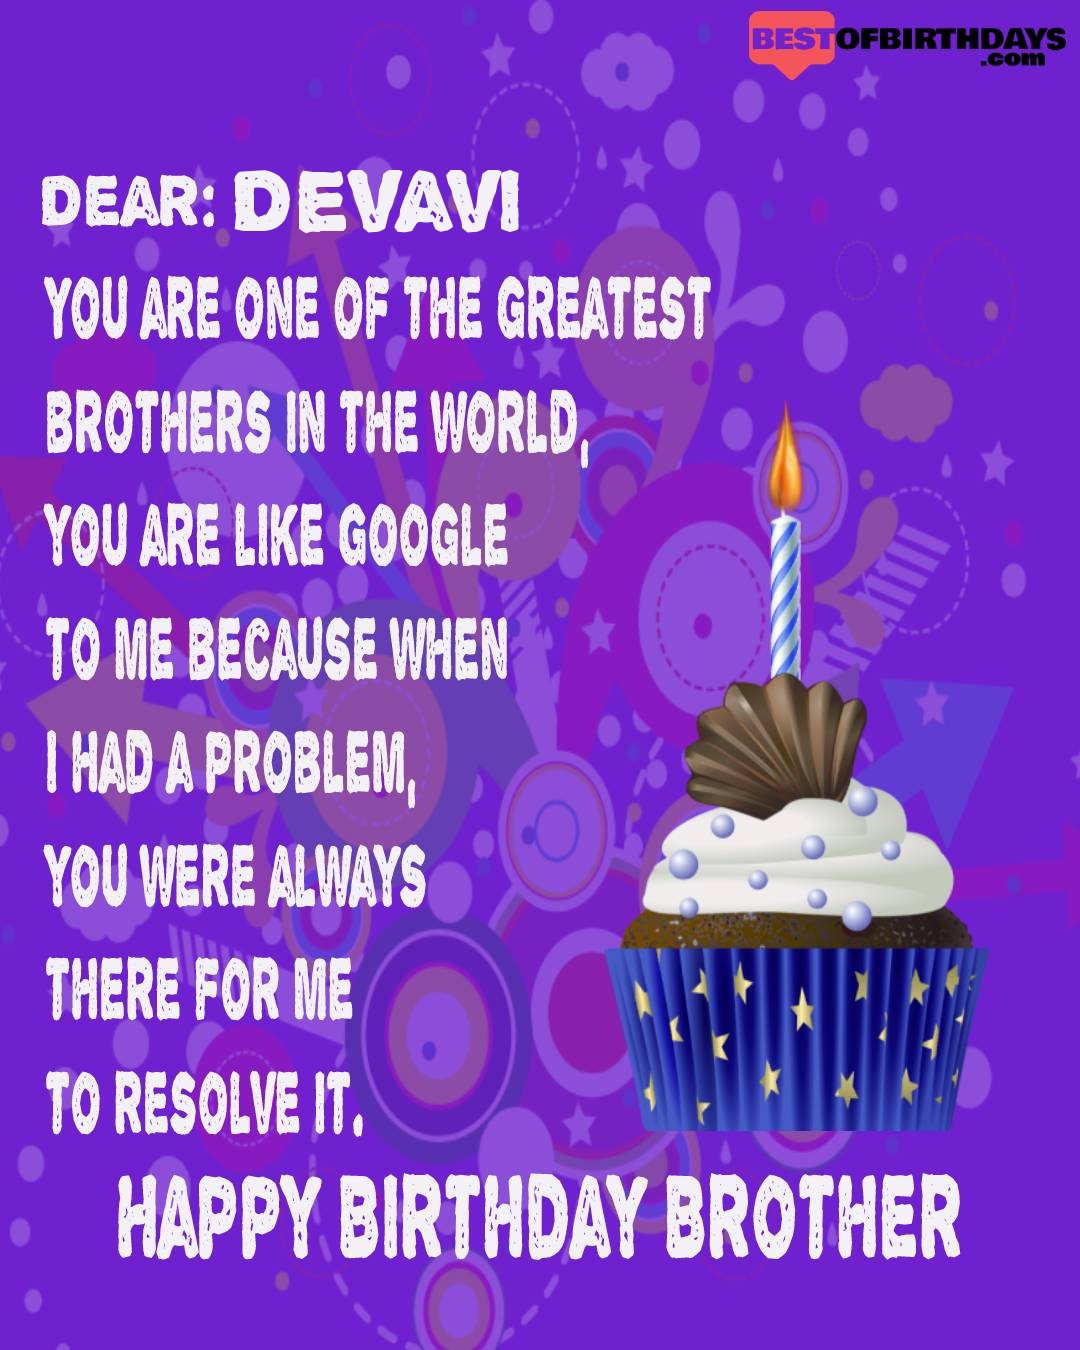 Happy birthday devavi bhai brother bro